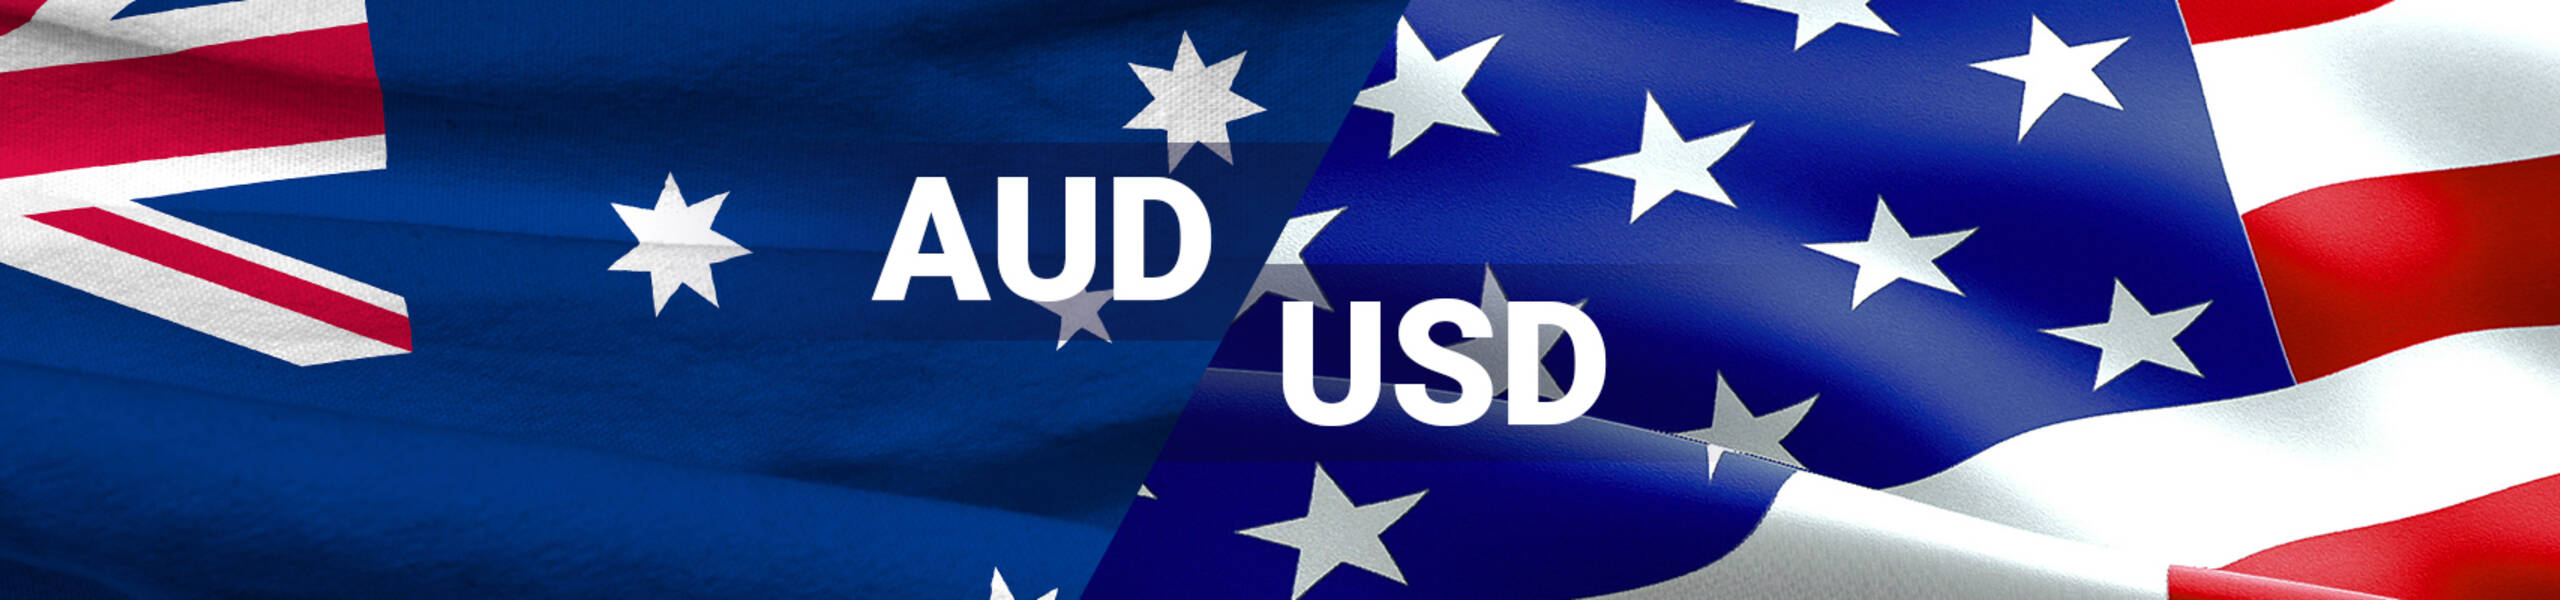 AUD/USD Trade Signal 2017/10/24